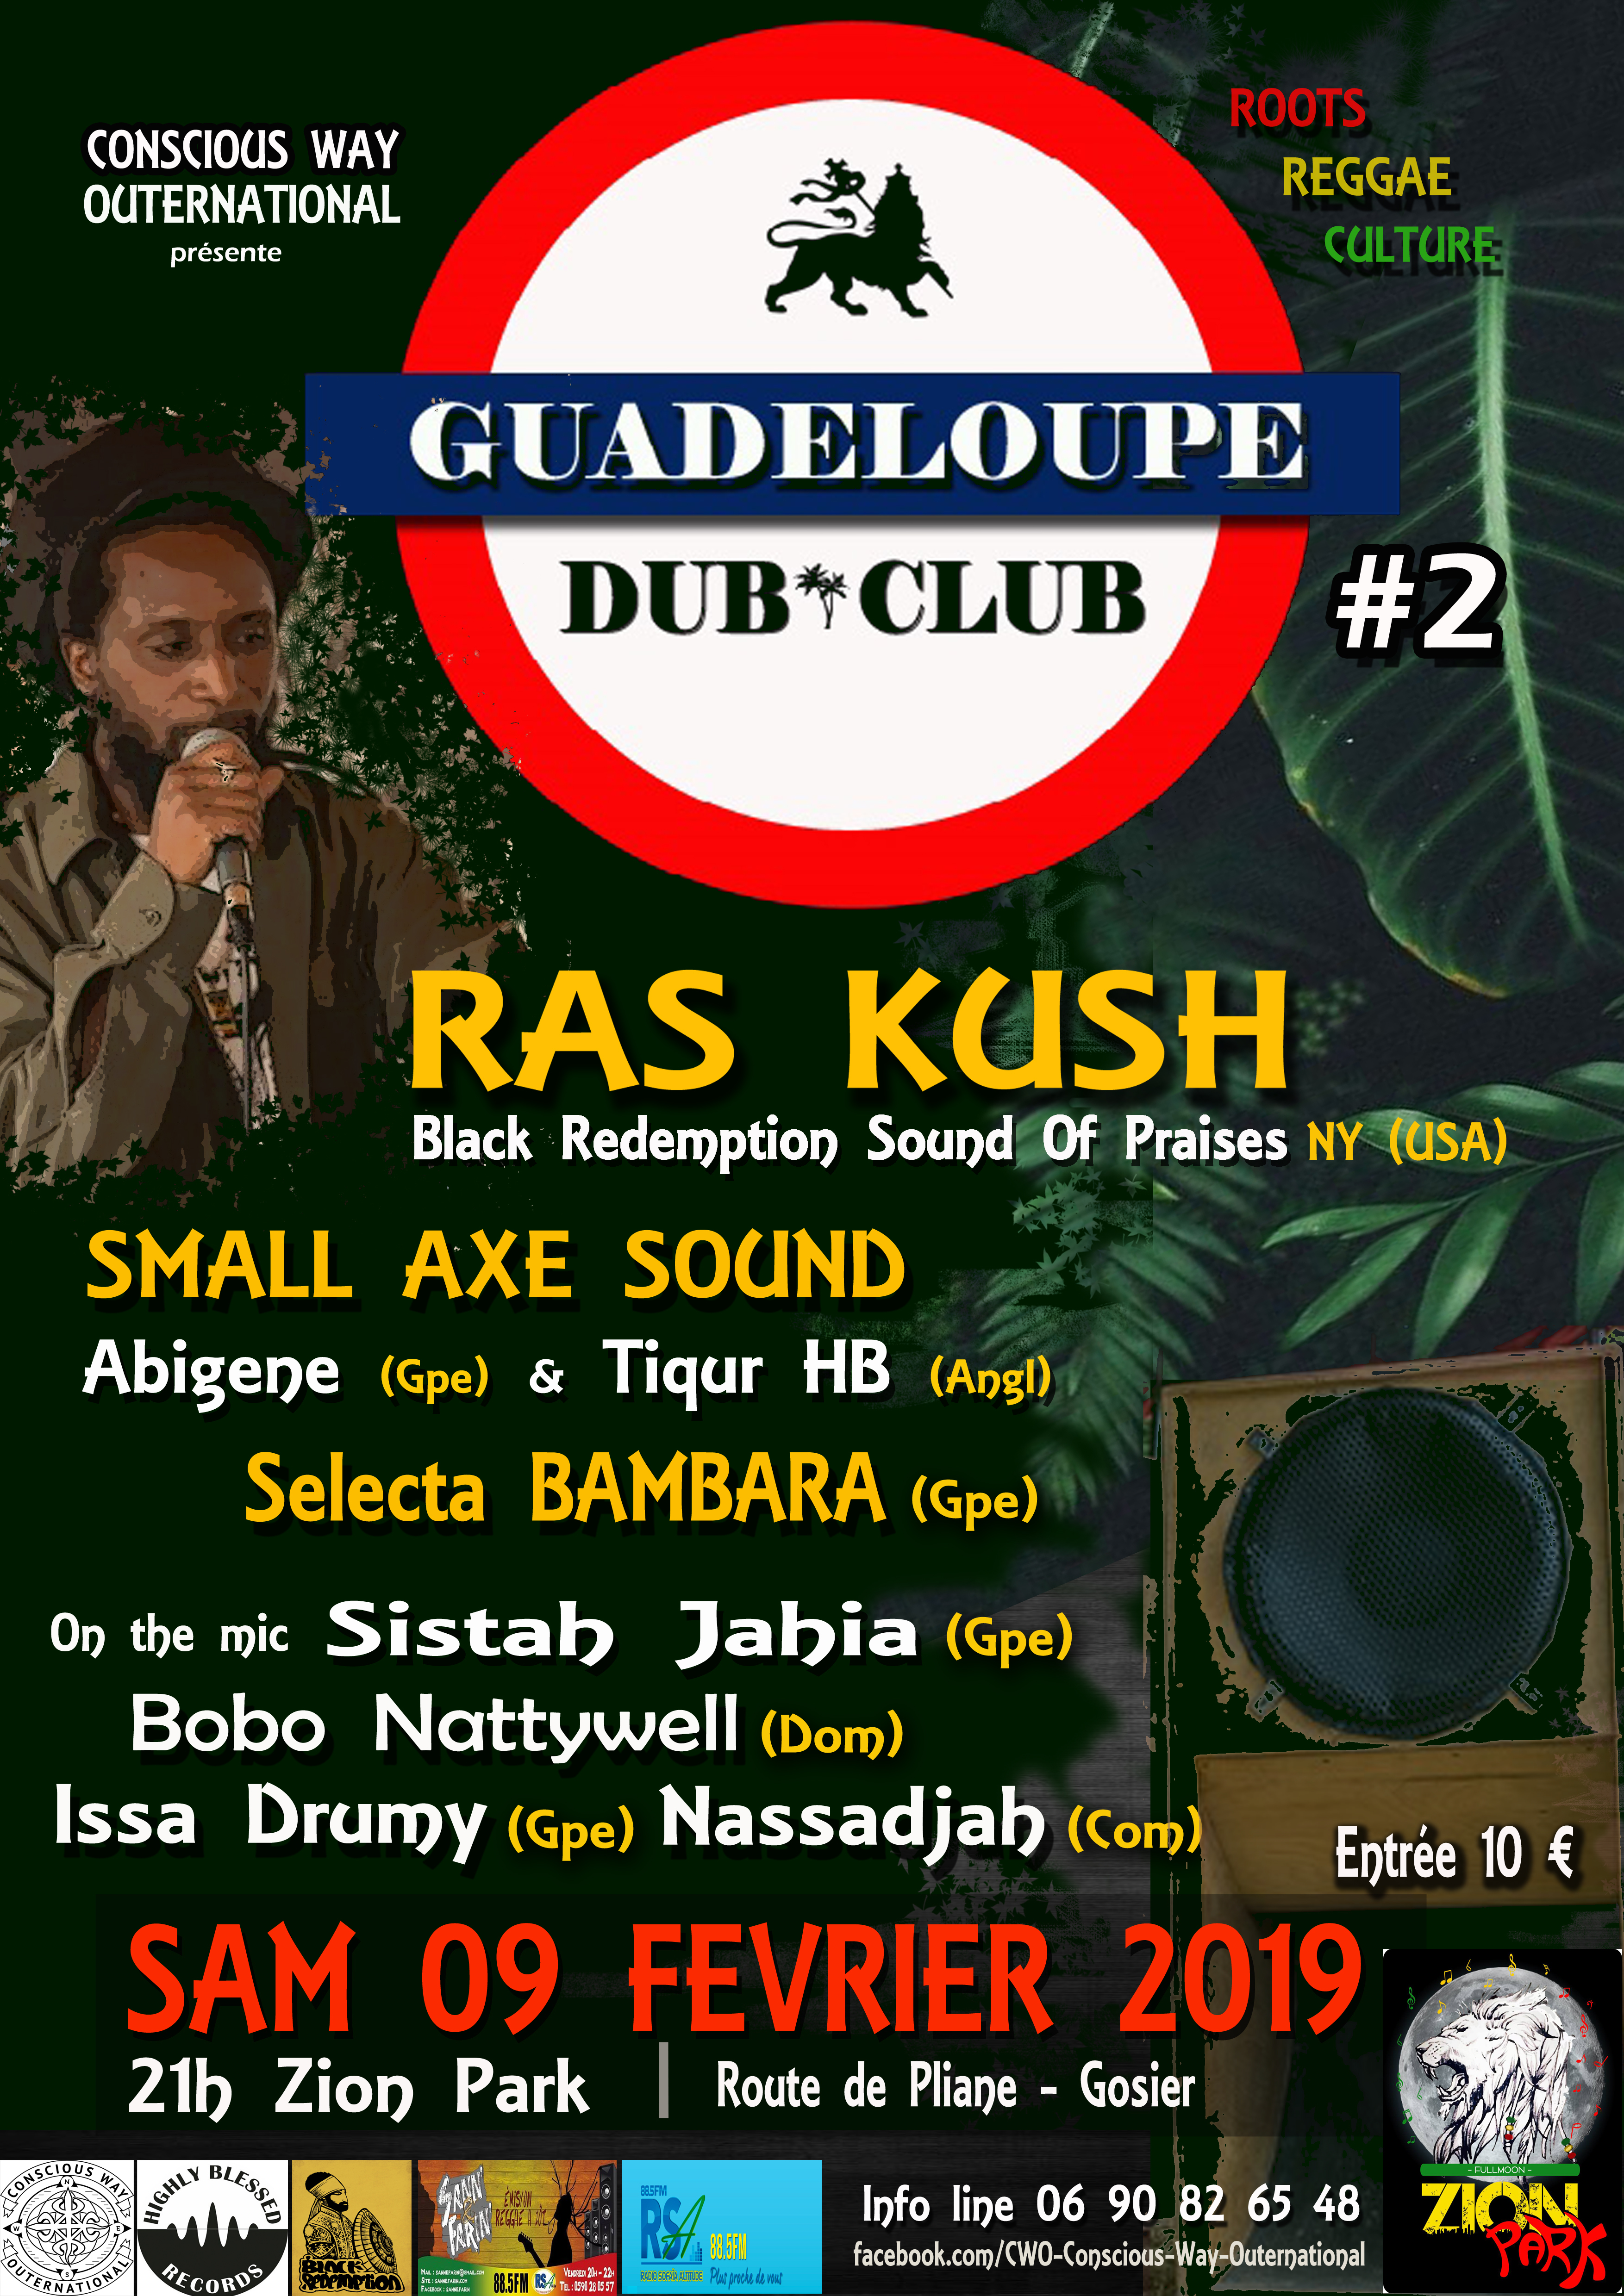 Guadeloupe Dub Club # 2